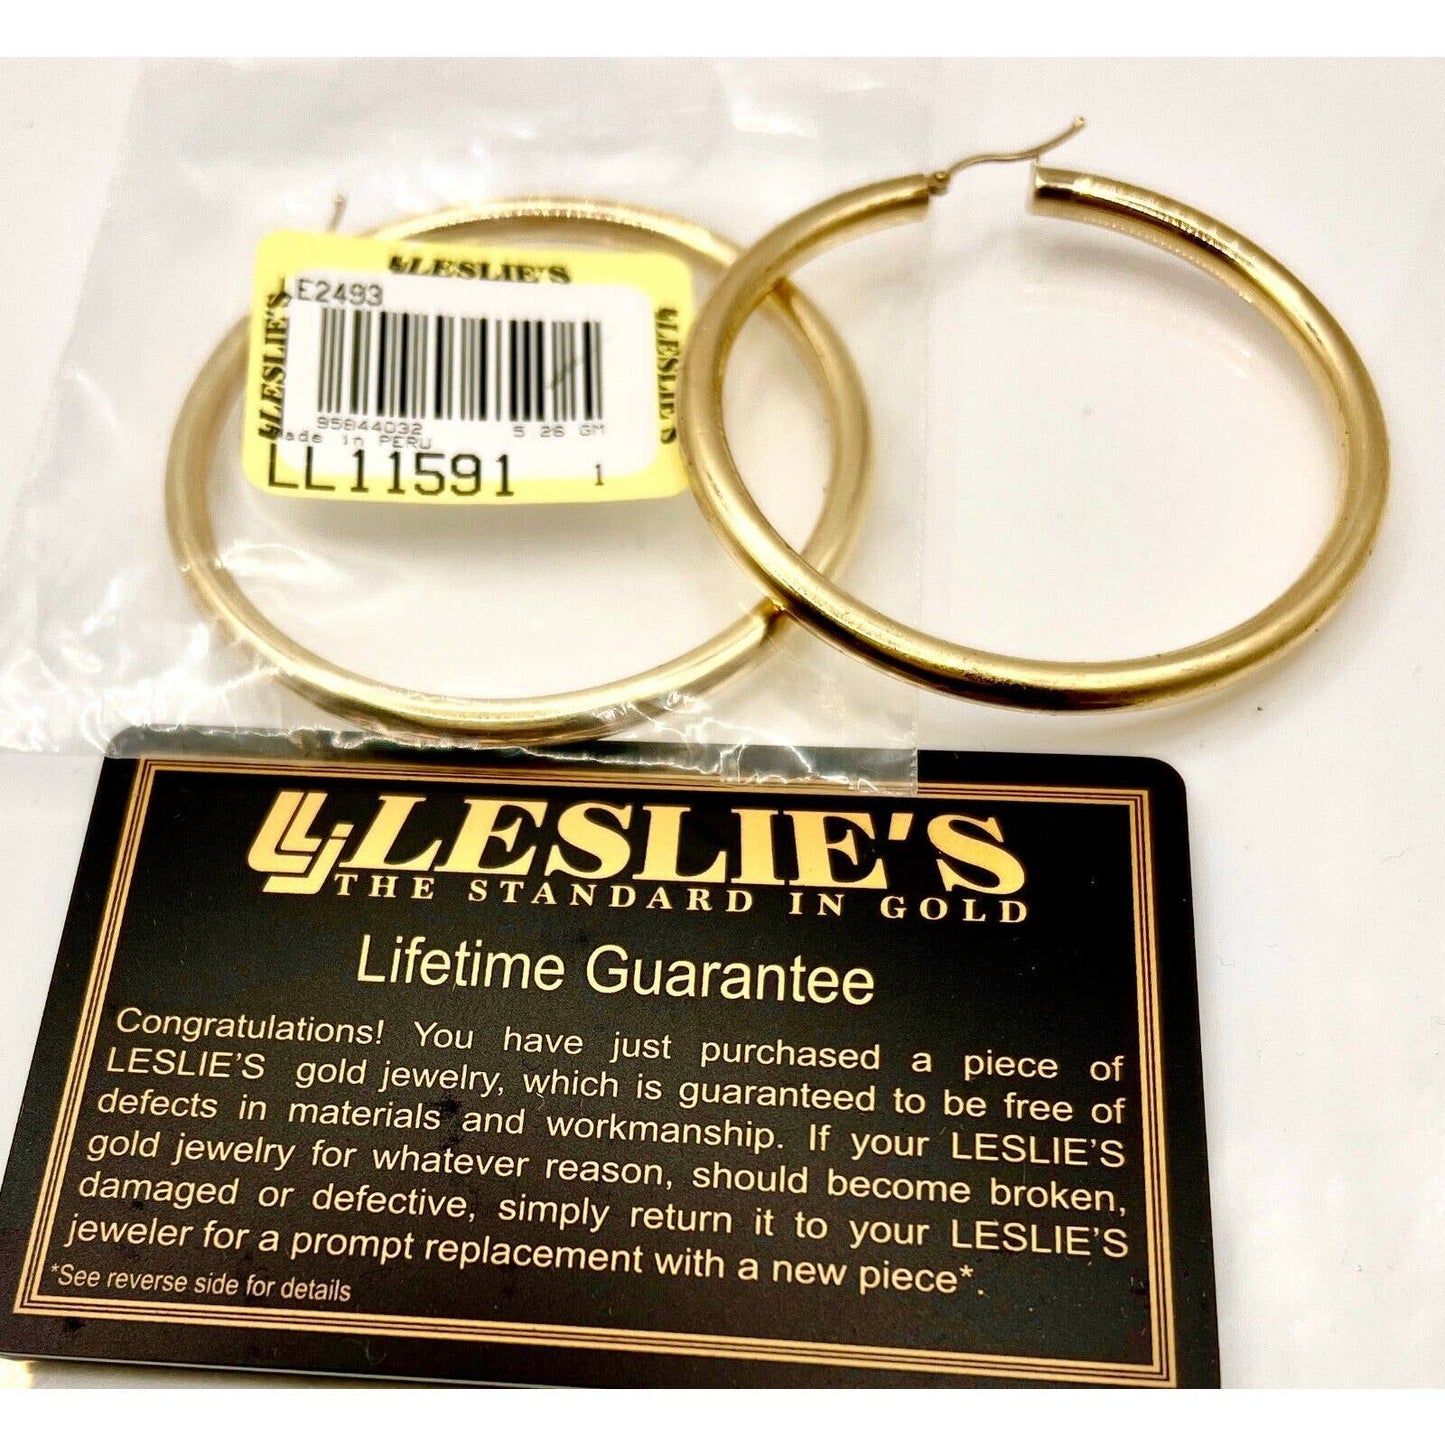 14k Italian Gold Large Hoop Earrings